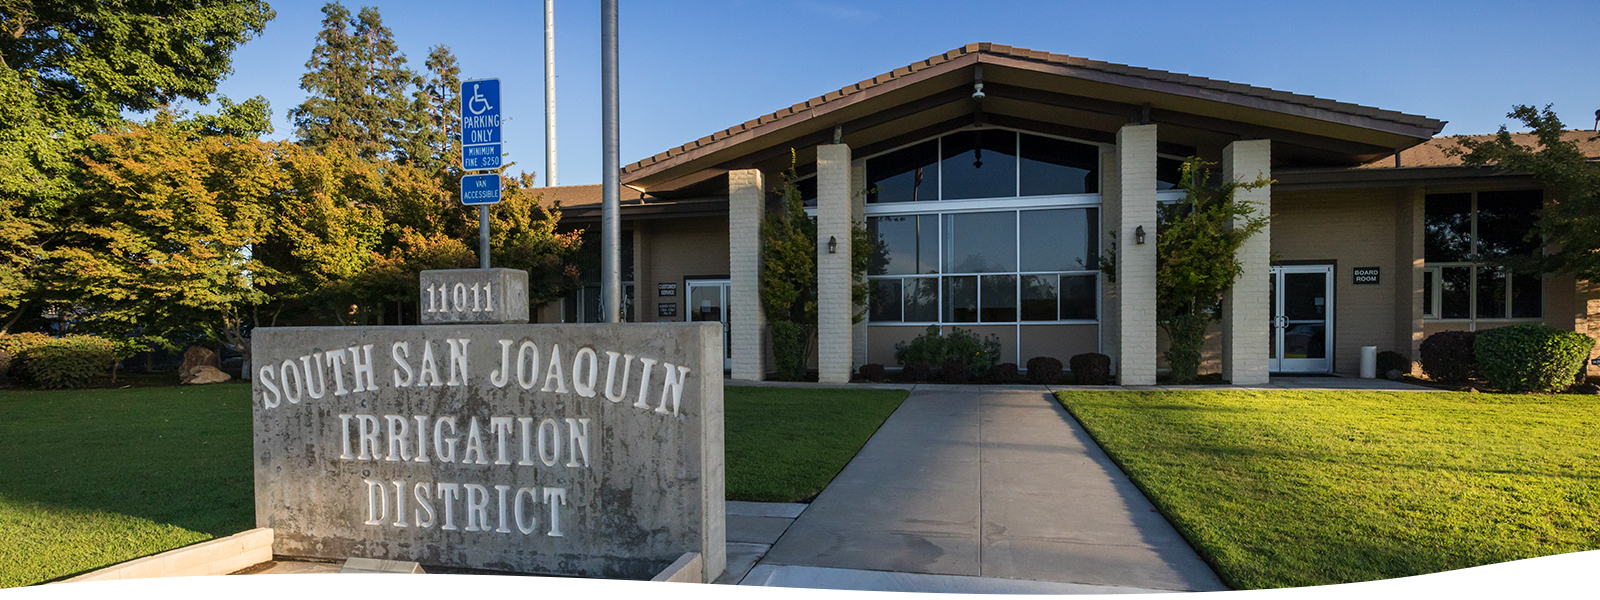 S San Joaquin Irrigation District building